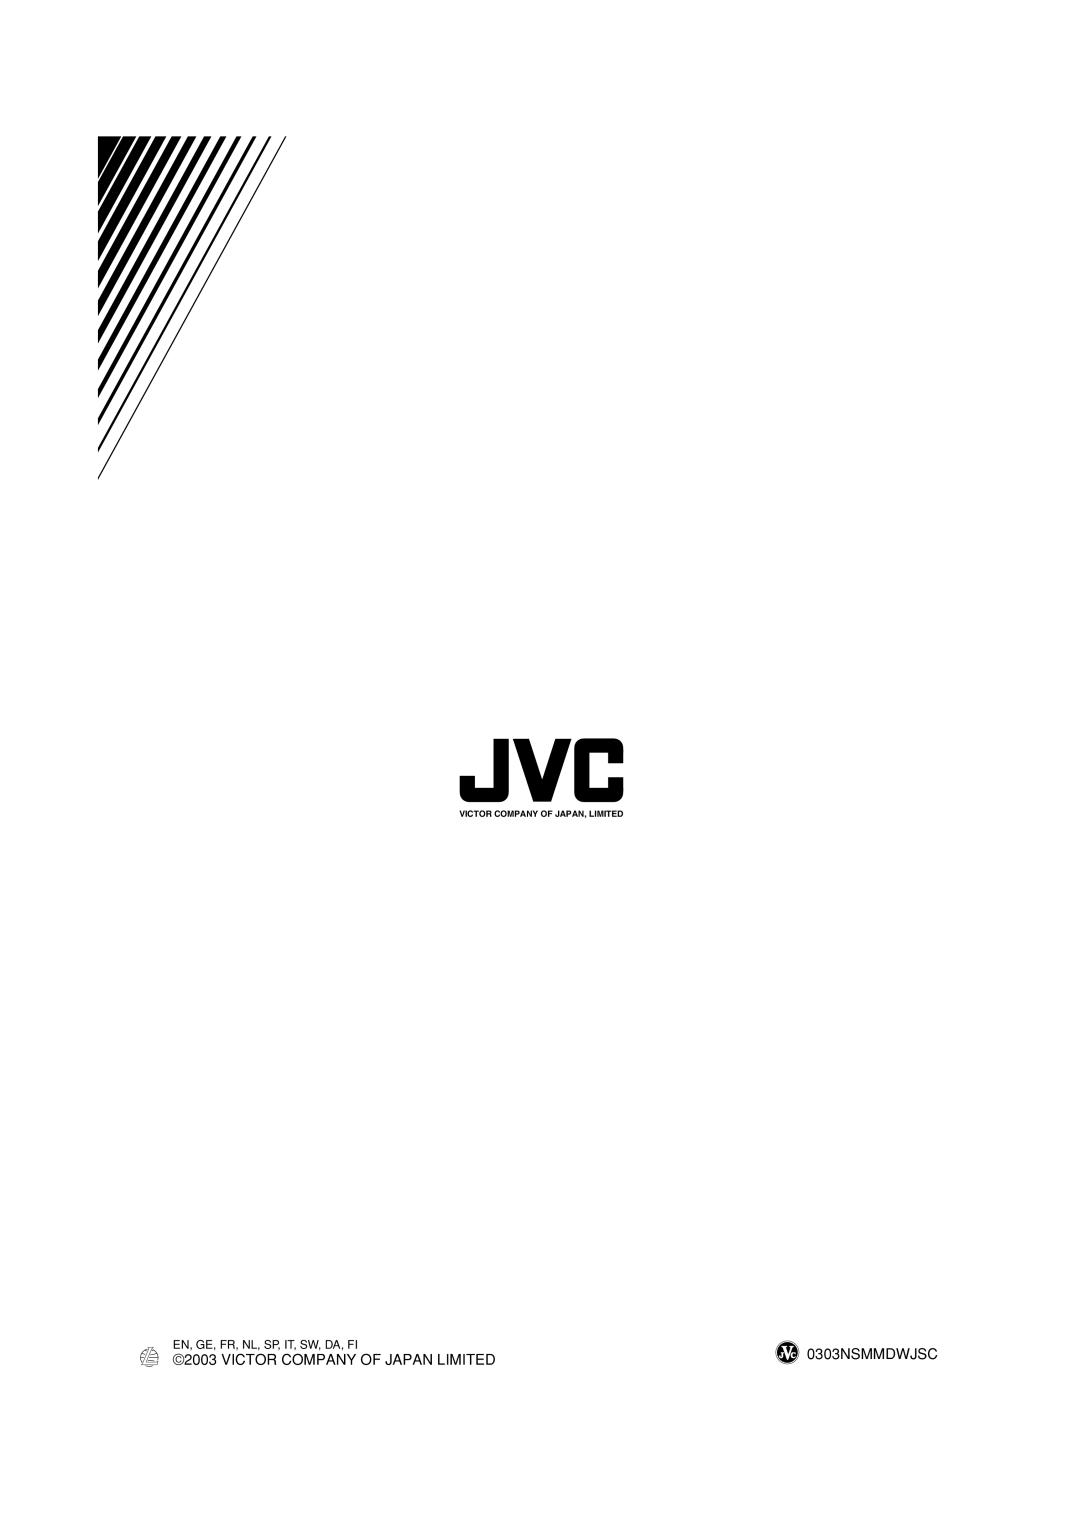 JVC SP-DW103 manual 0303NSMMDWJSC, Victor Company Of Japan Limited, En, Ge, Fr, Nl, Sp, It, Sw, Da, Fi 